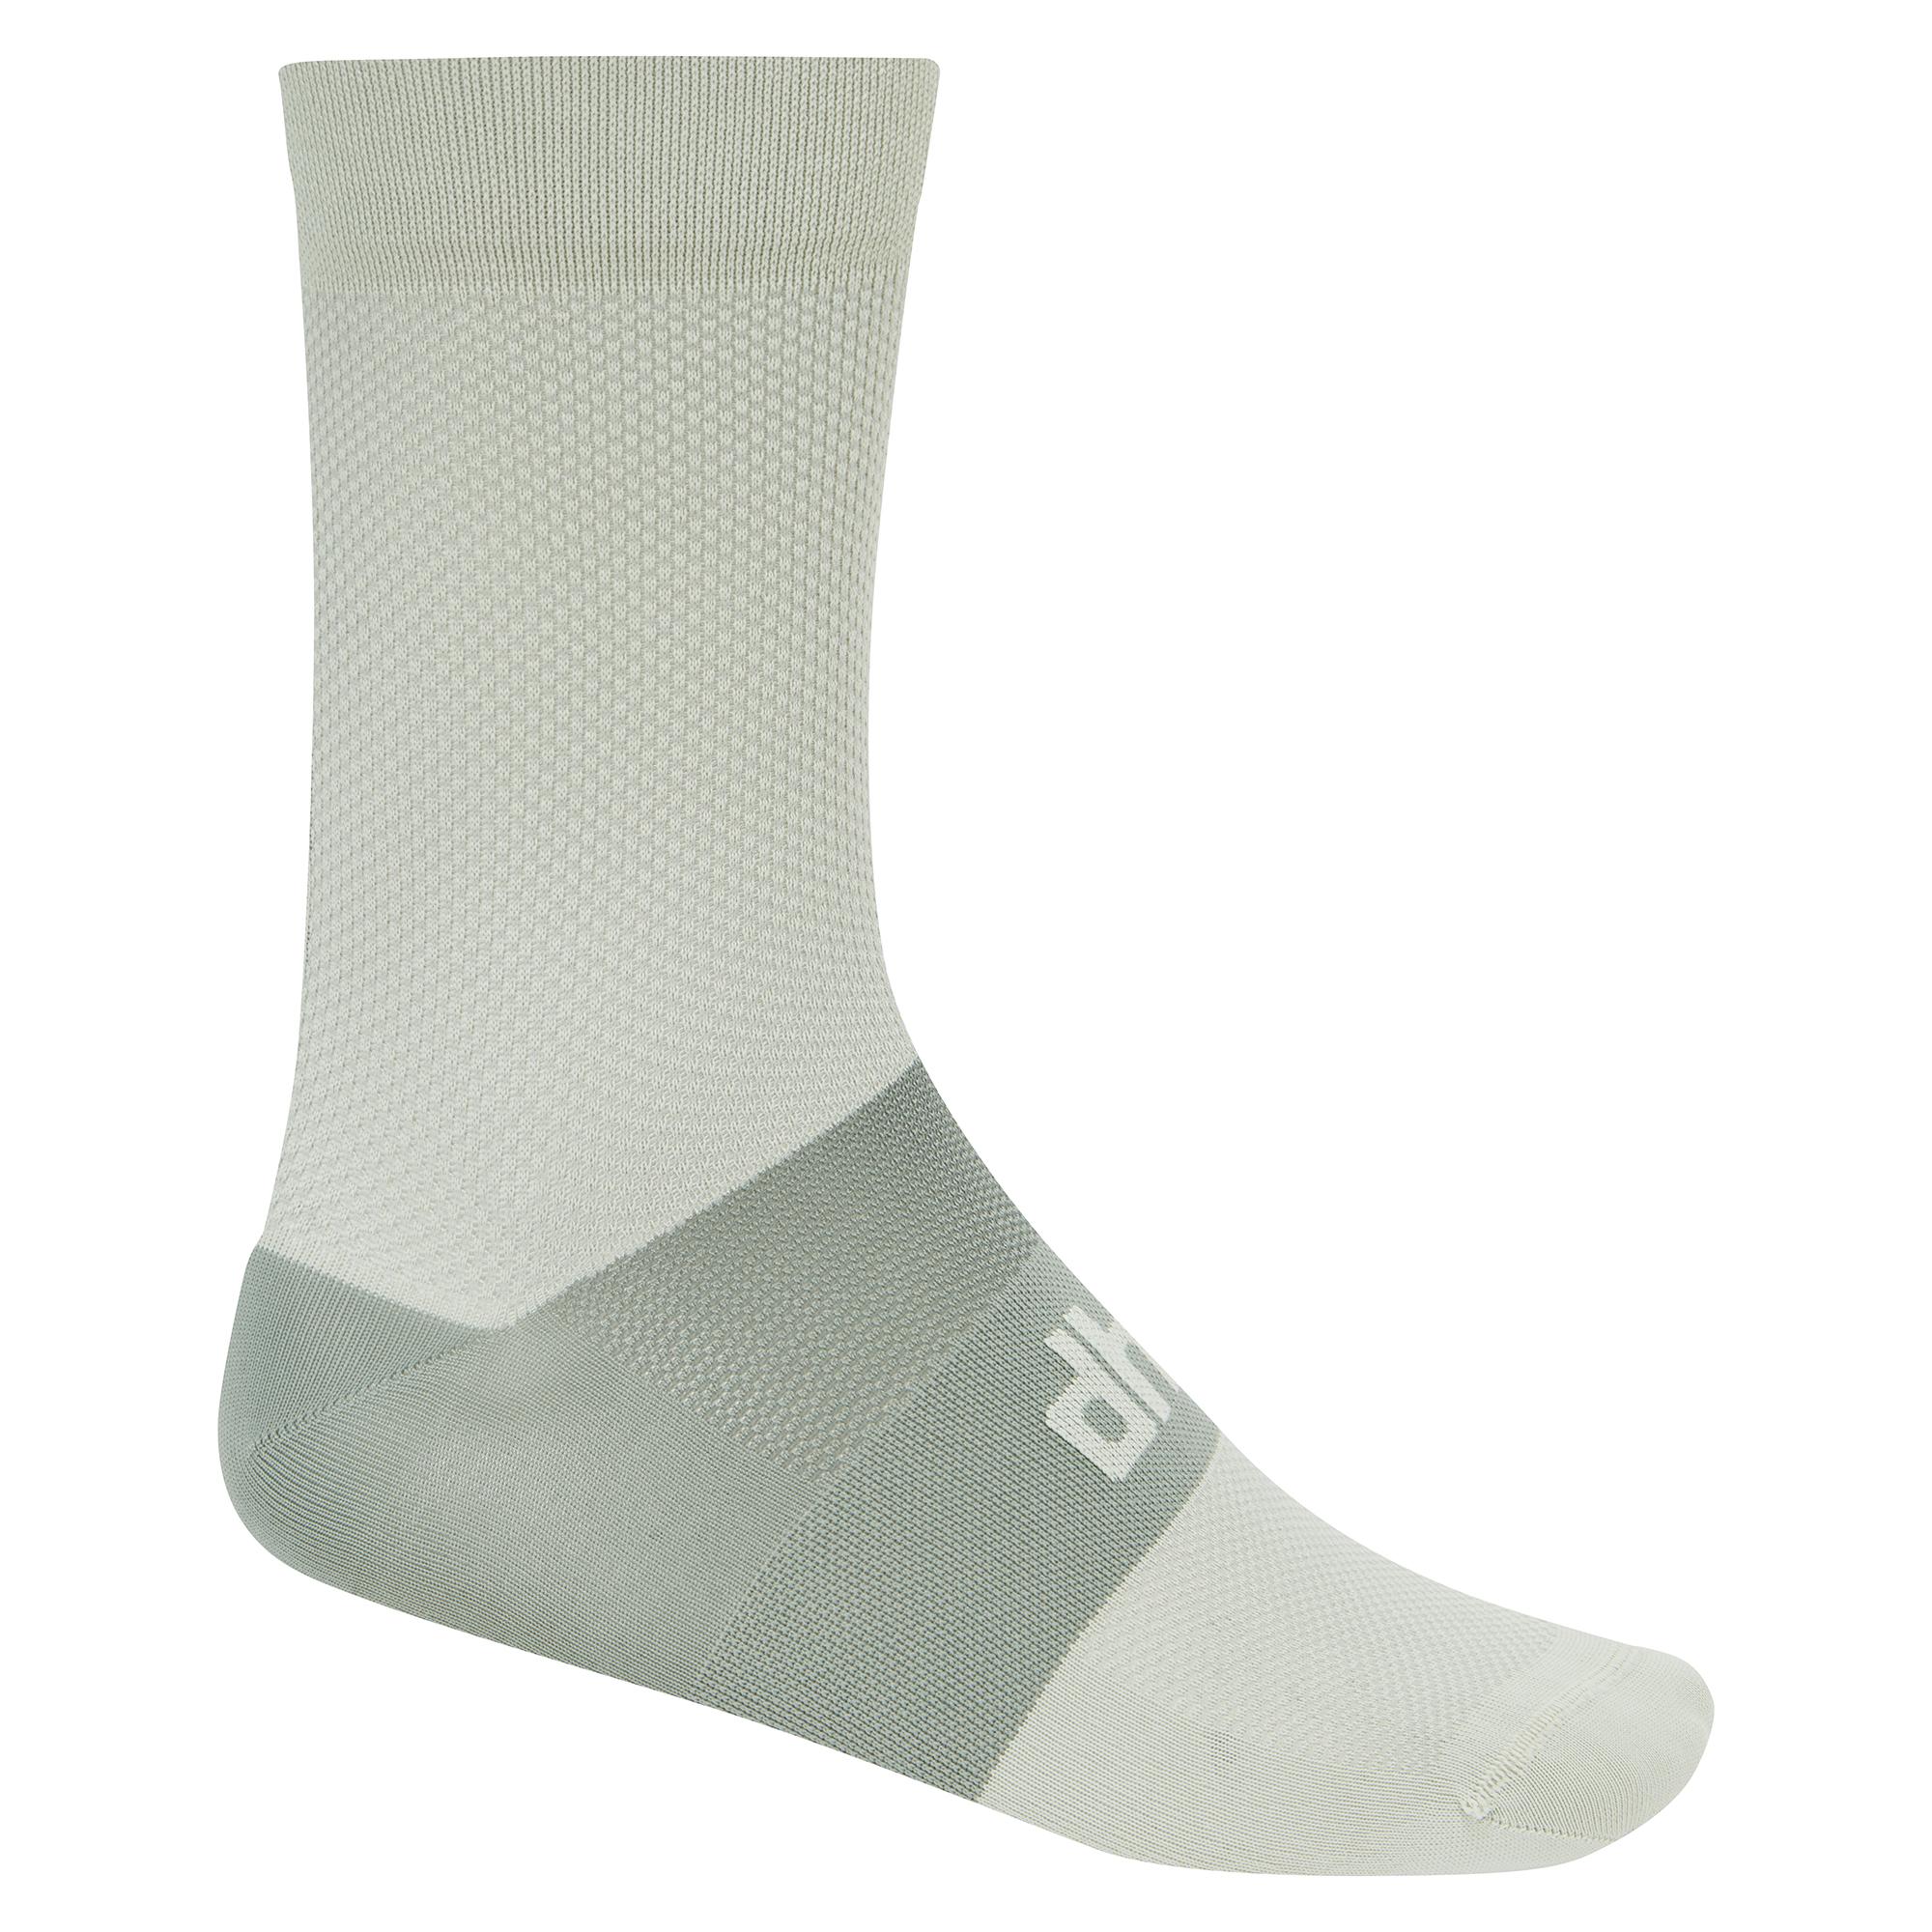 Dhb Aeron Lab Sock - Puritan Grey